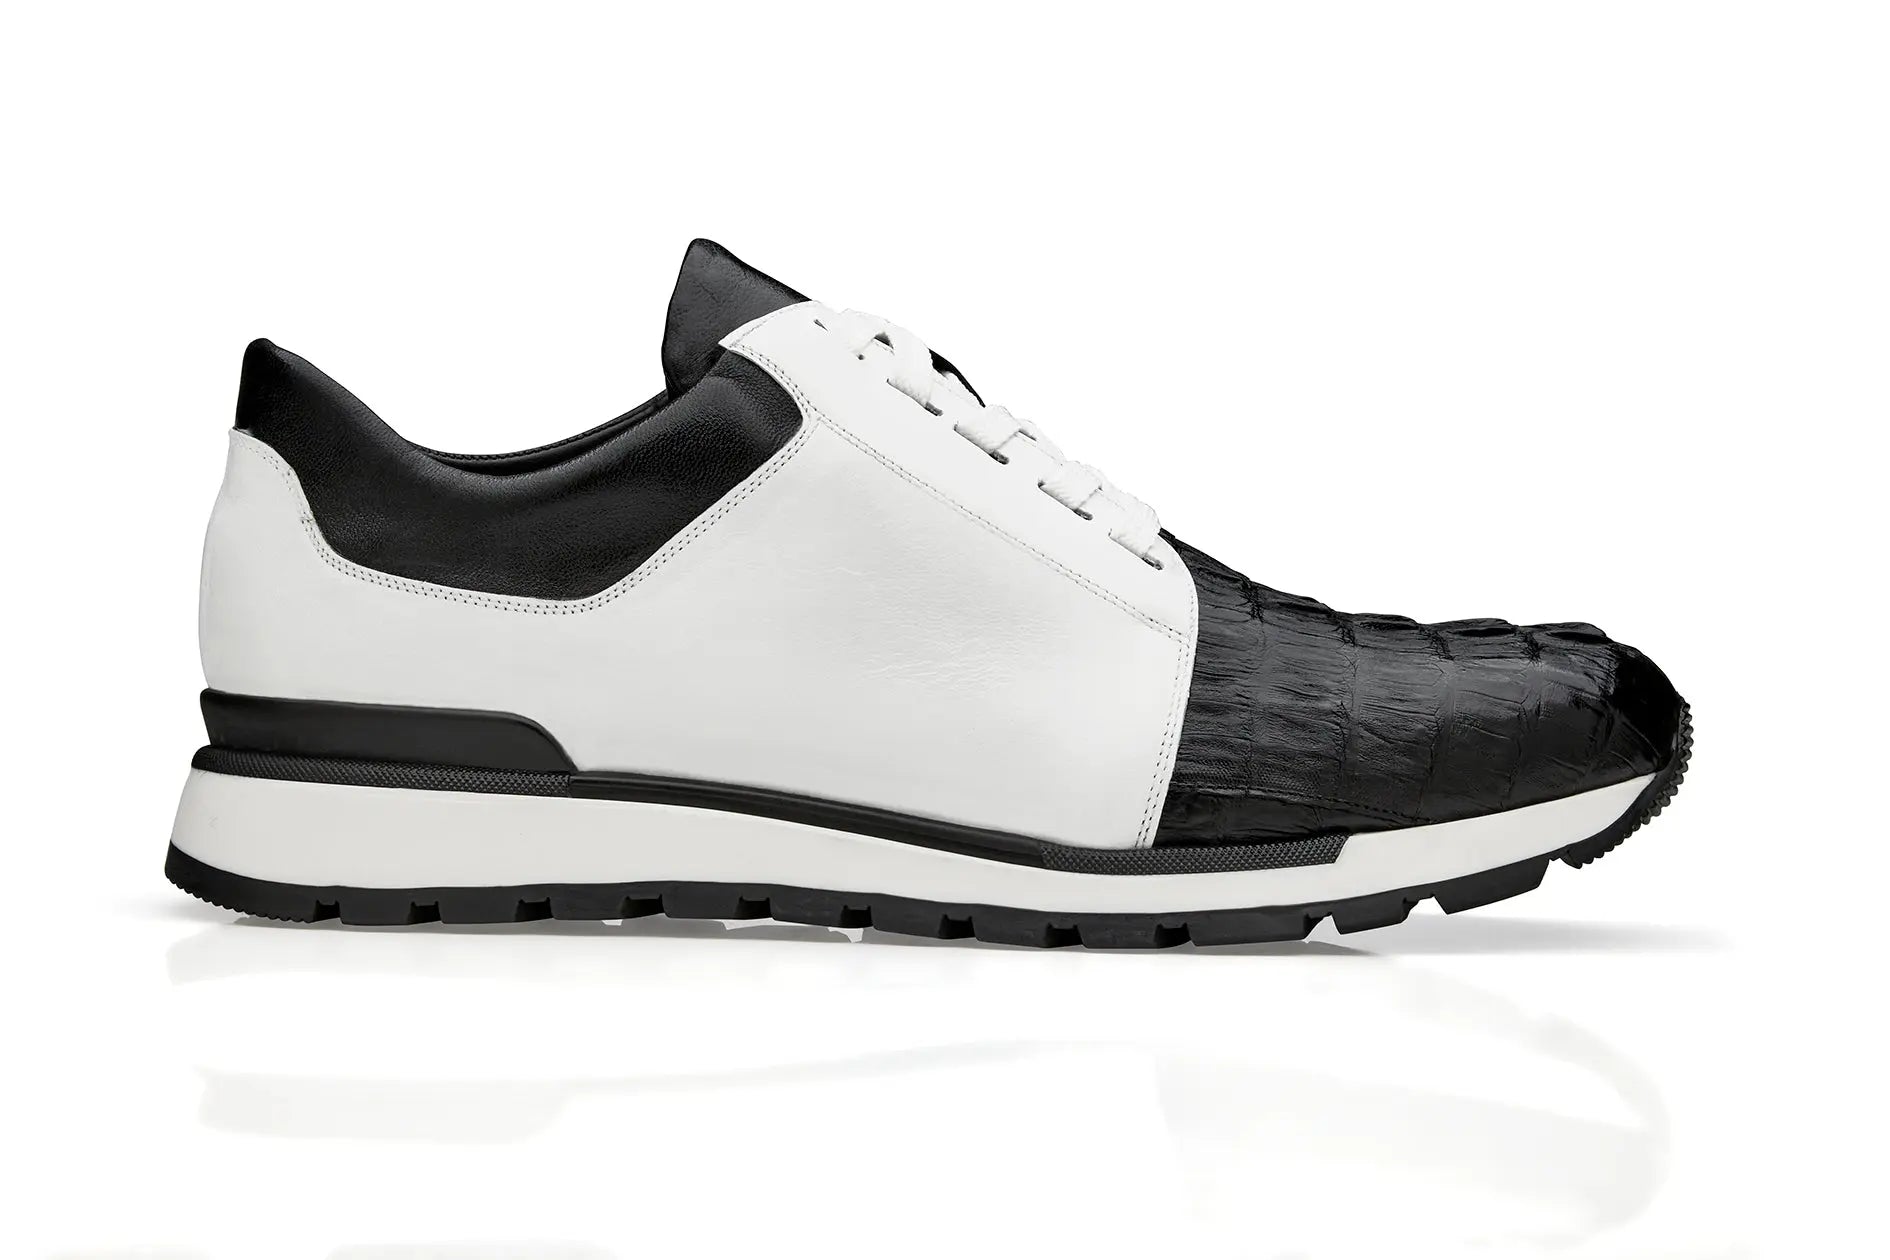 Belvedere Titan in Black and White Caiman Crocodile Sneakers